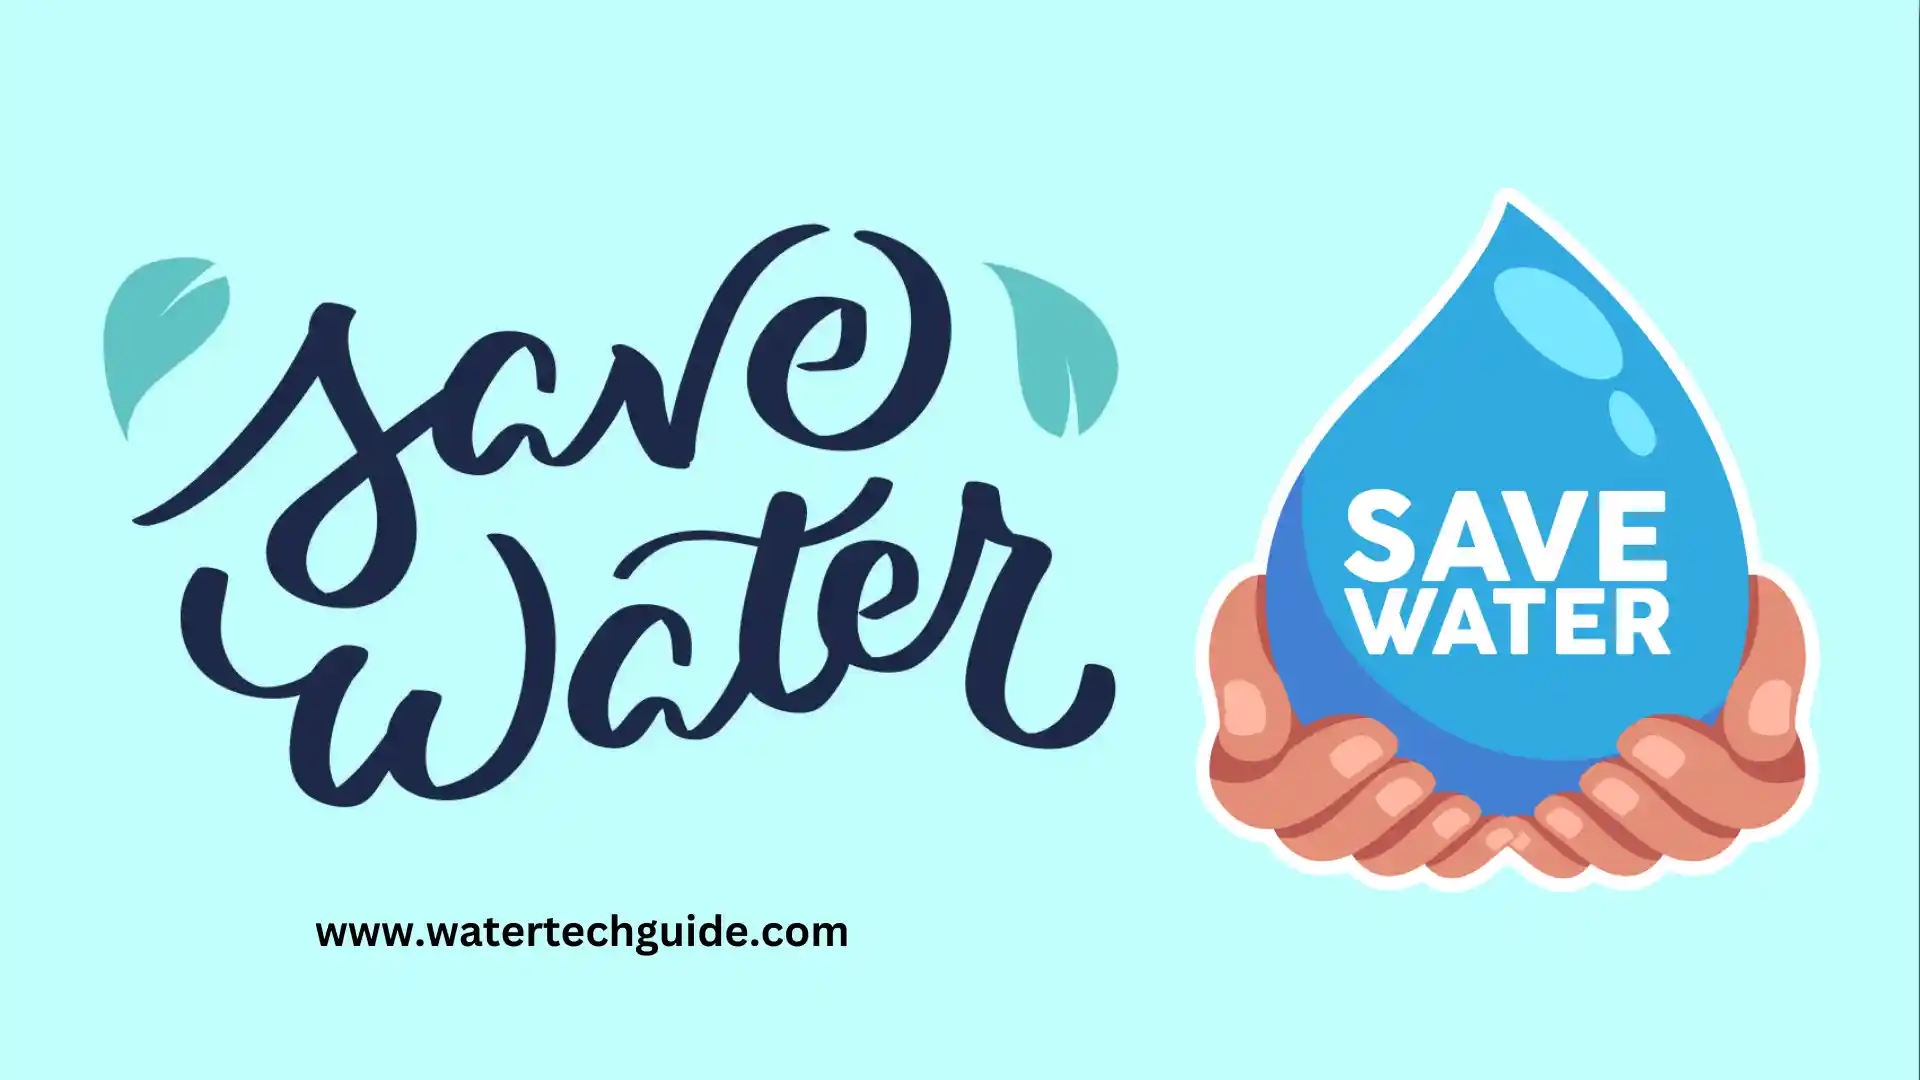 Design for Saving Water